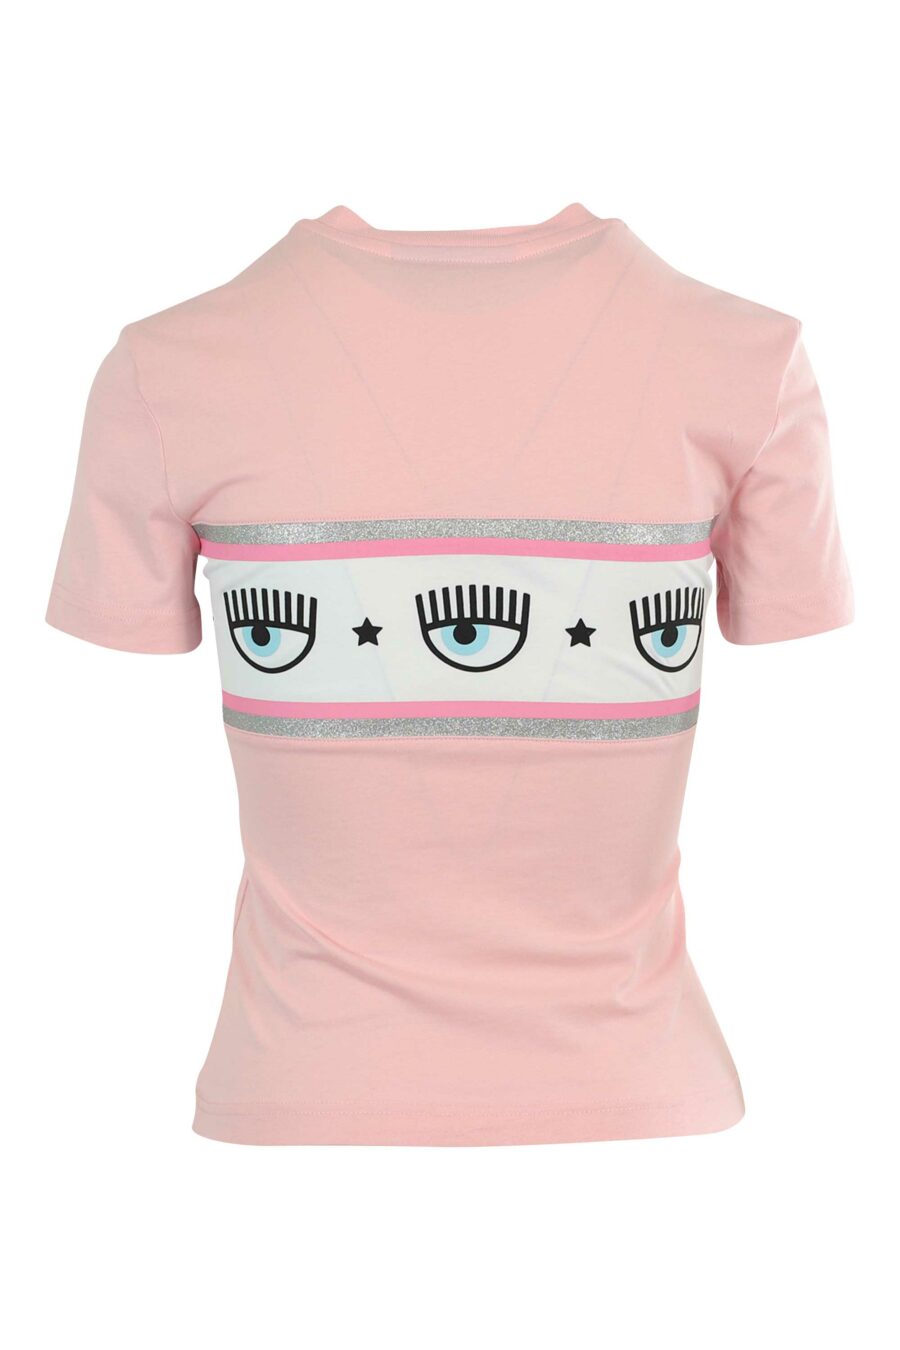 T-shirt rose avec logo œil sur ruban - 8052672419958 2